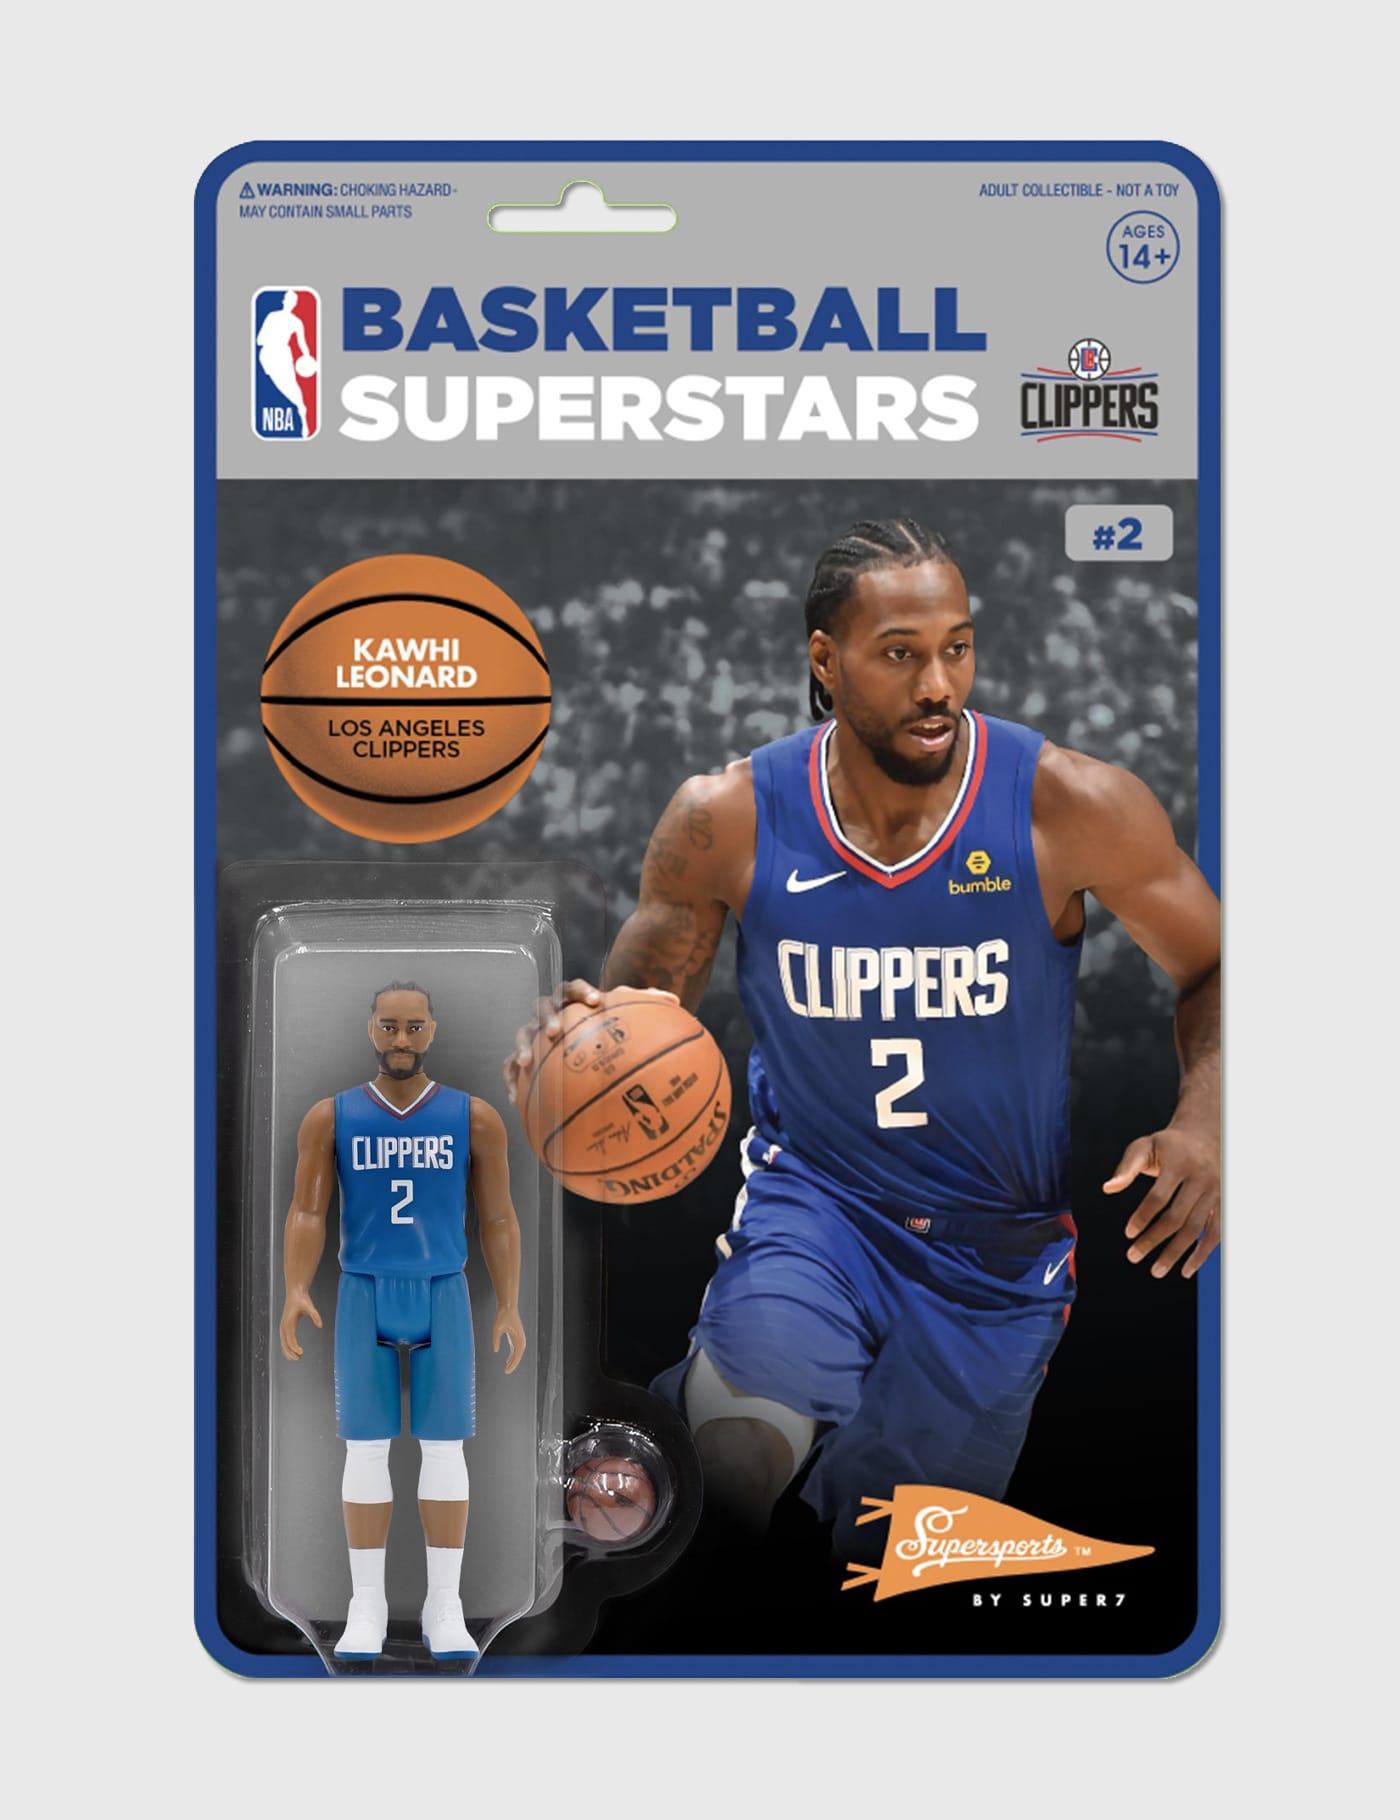 Super 7 - NBA Supersports Figure – Kawhi Leonard | HBX - Globally 